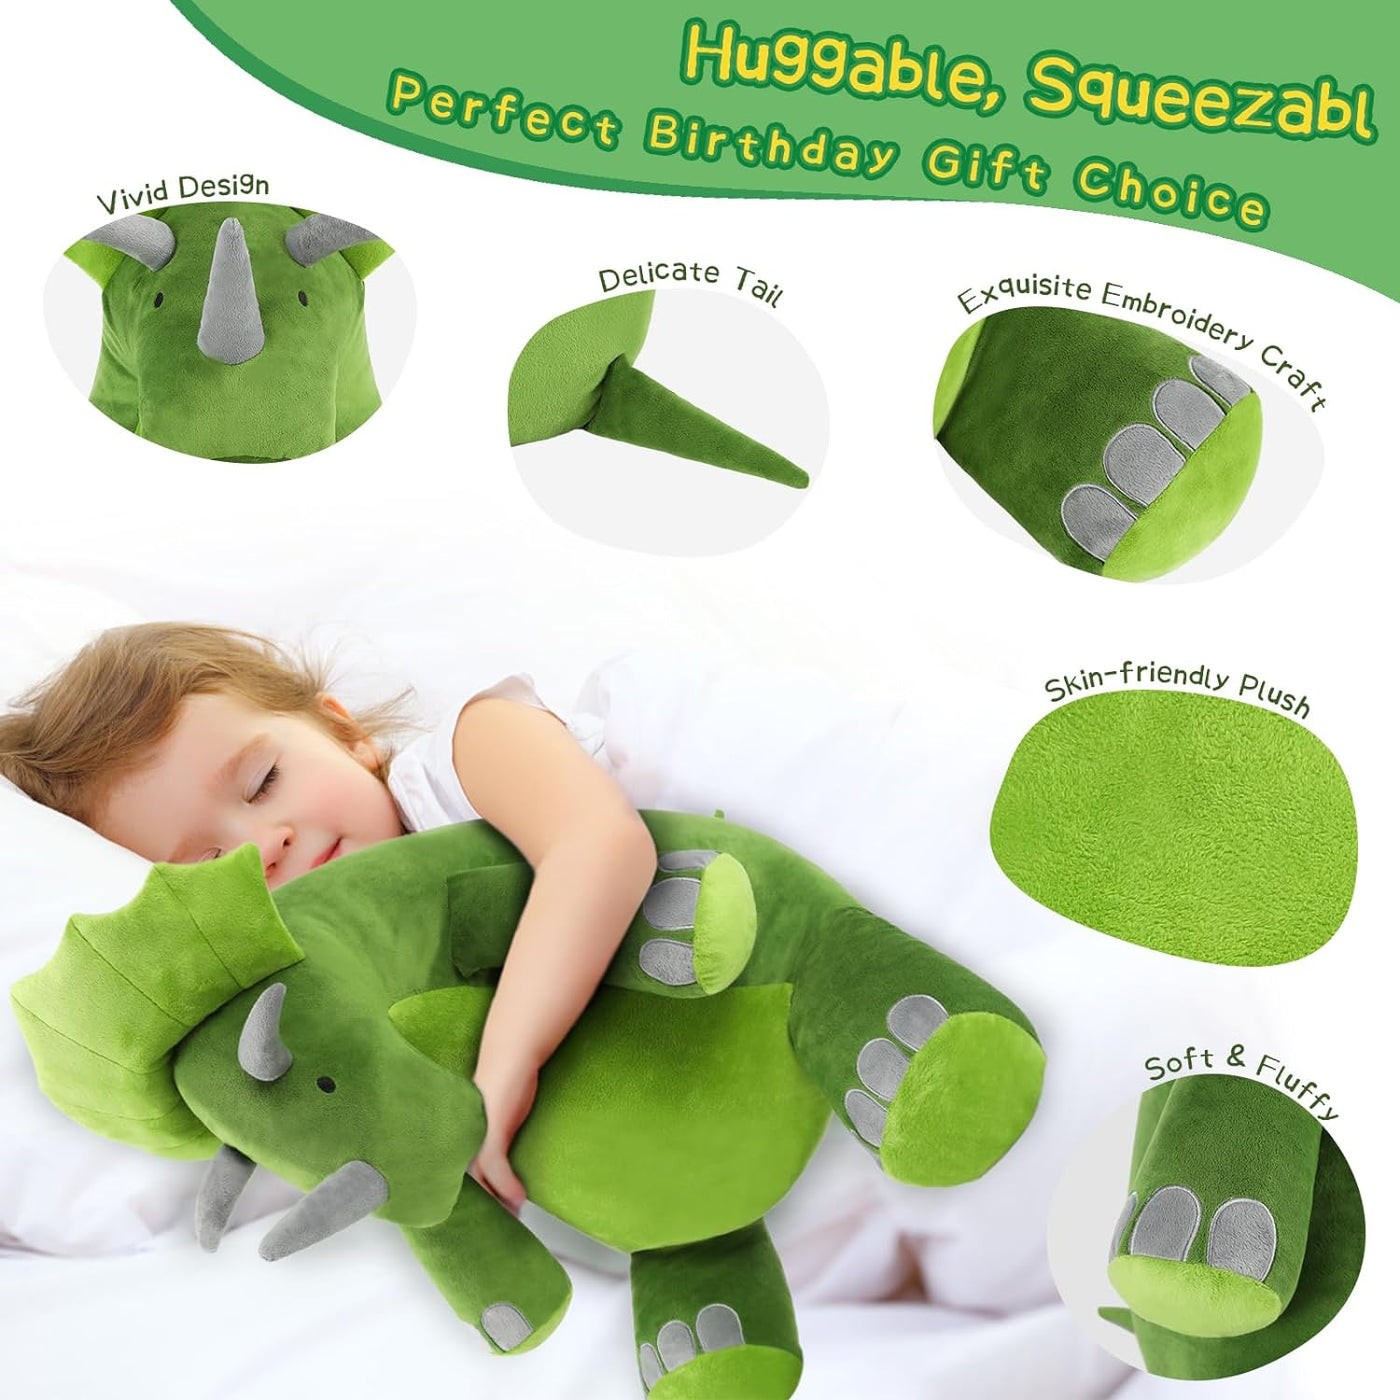 Sitting Dinosaur Stuffed Animal Toy, Green, 27 Inches